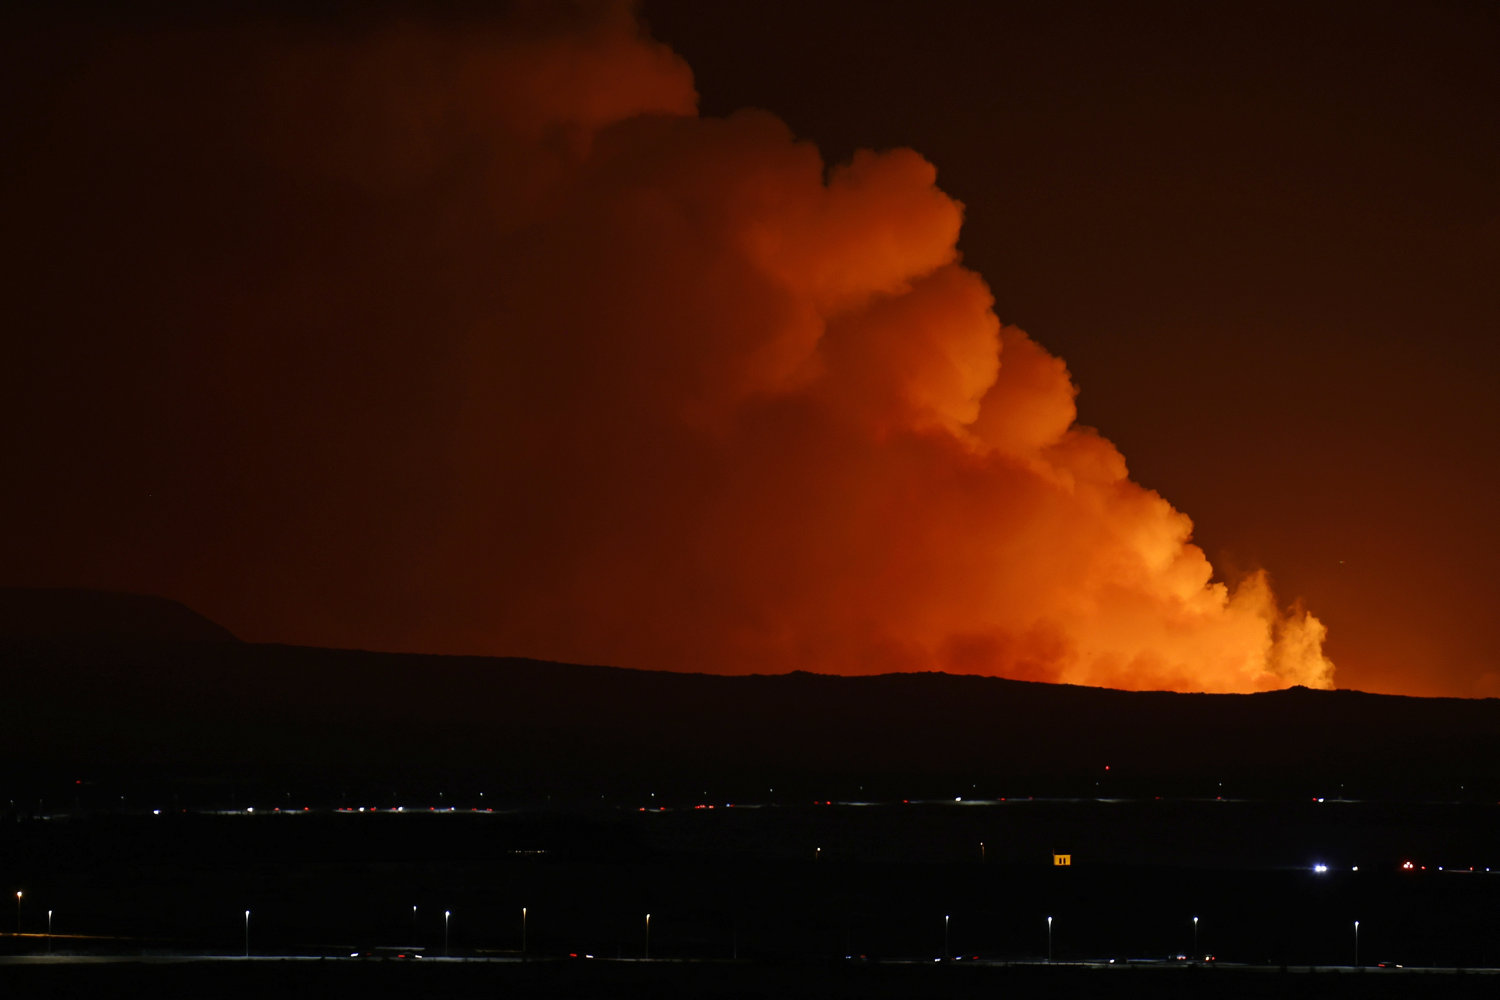 billedserie: vulkanudbrud maler himlen over island orange